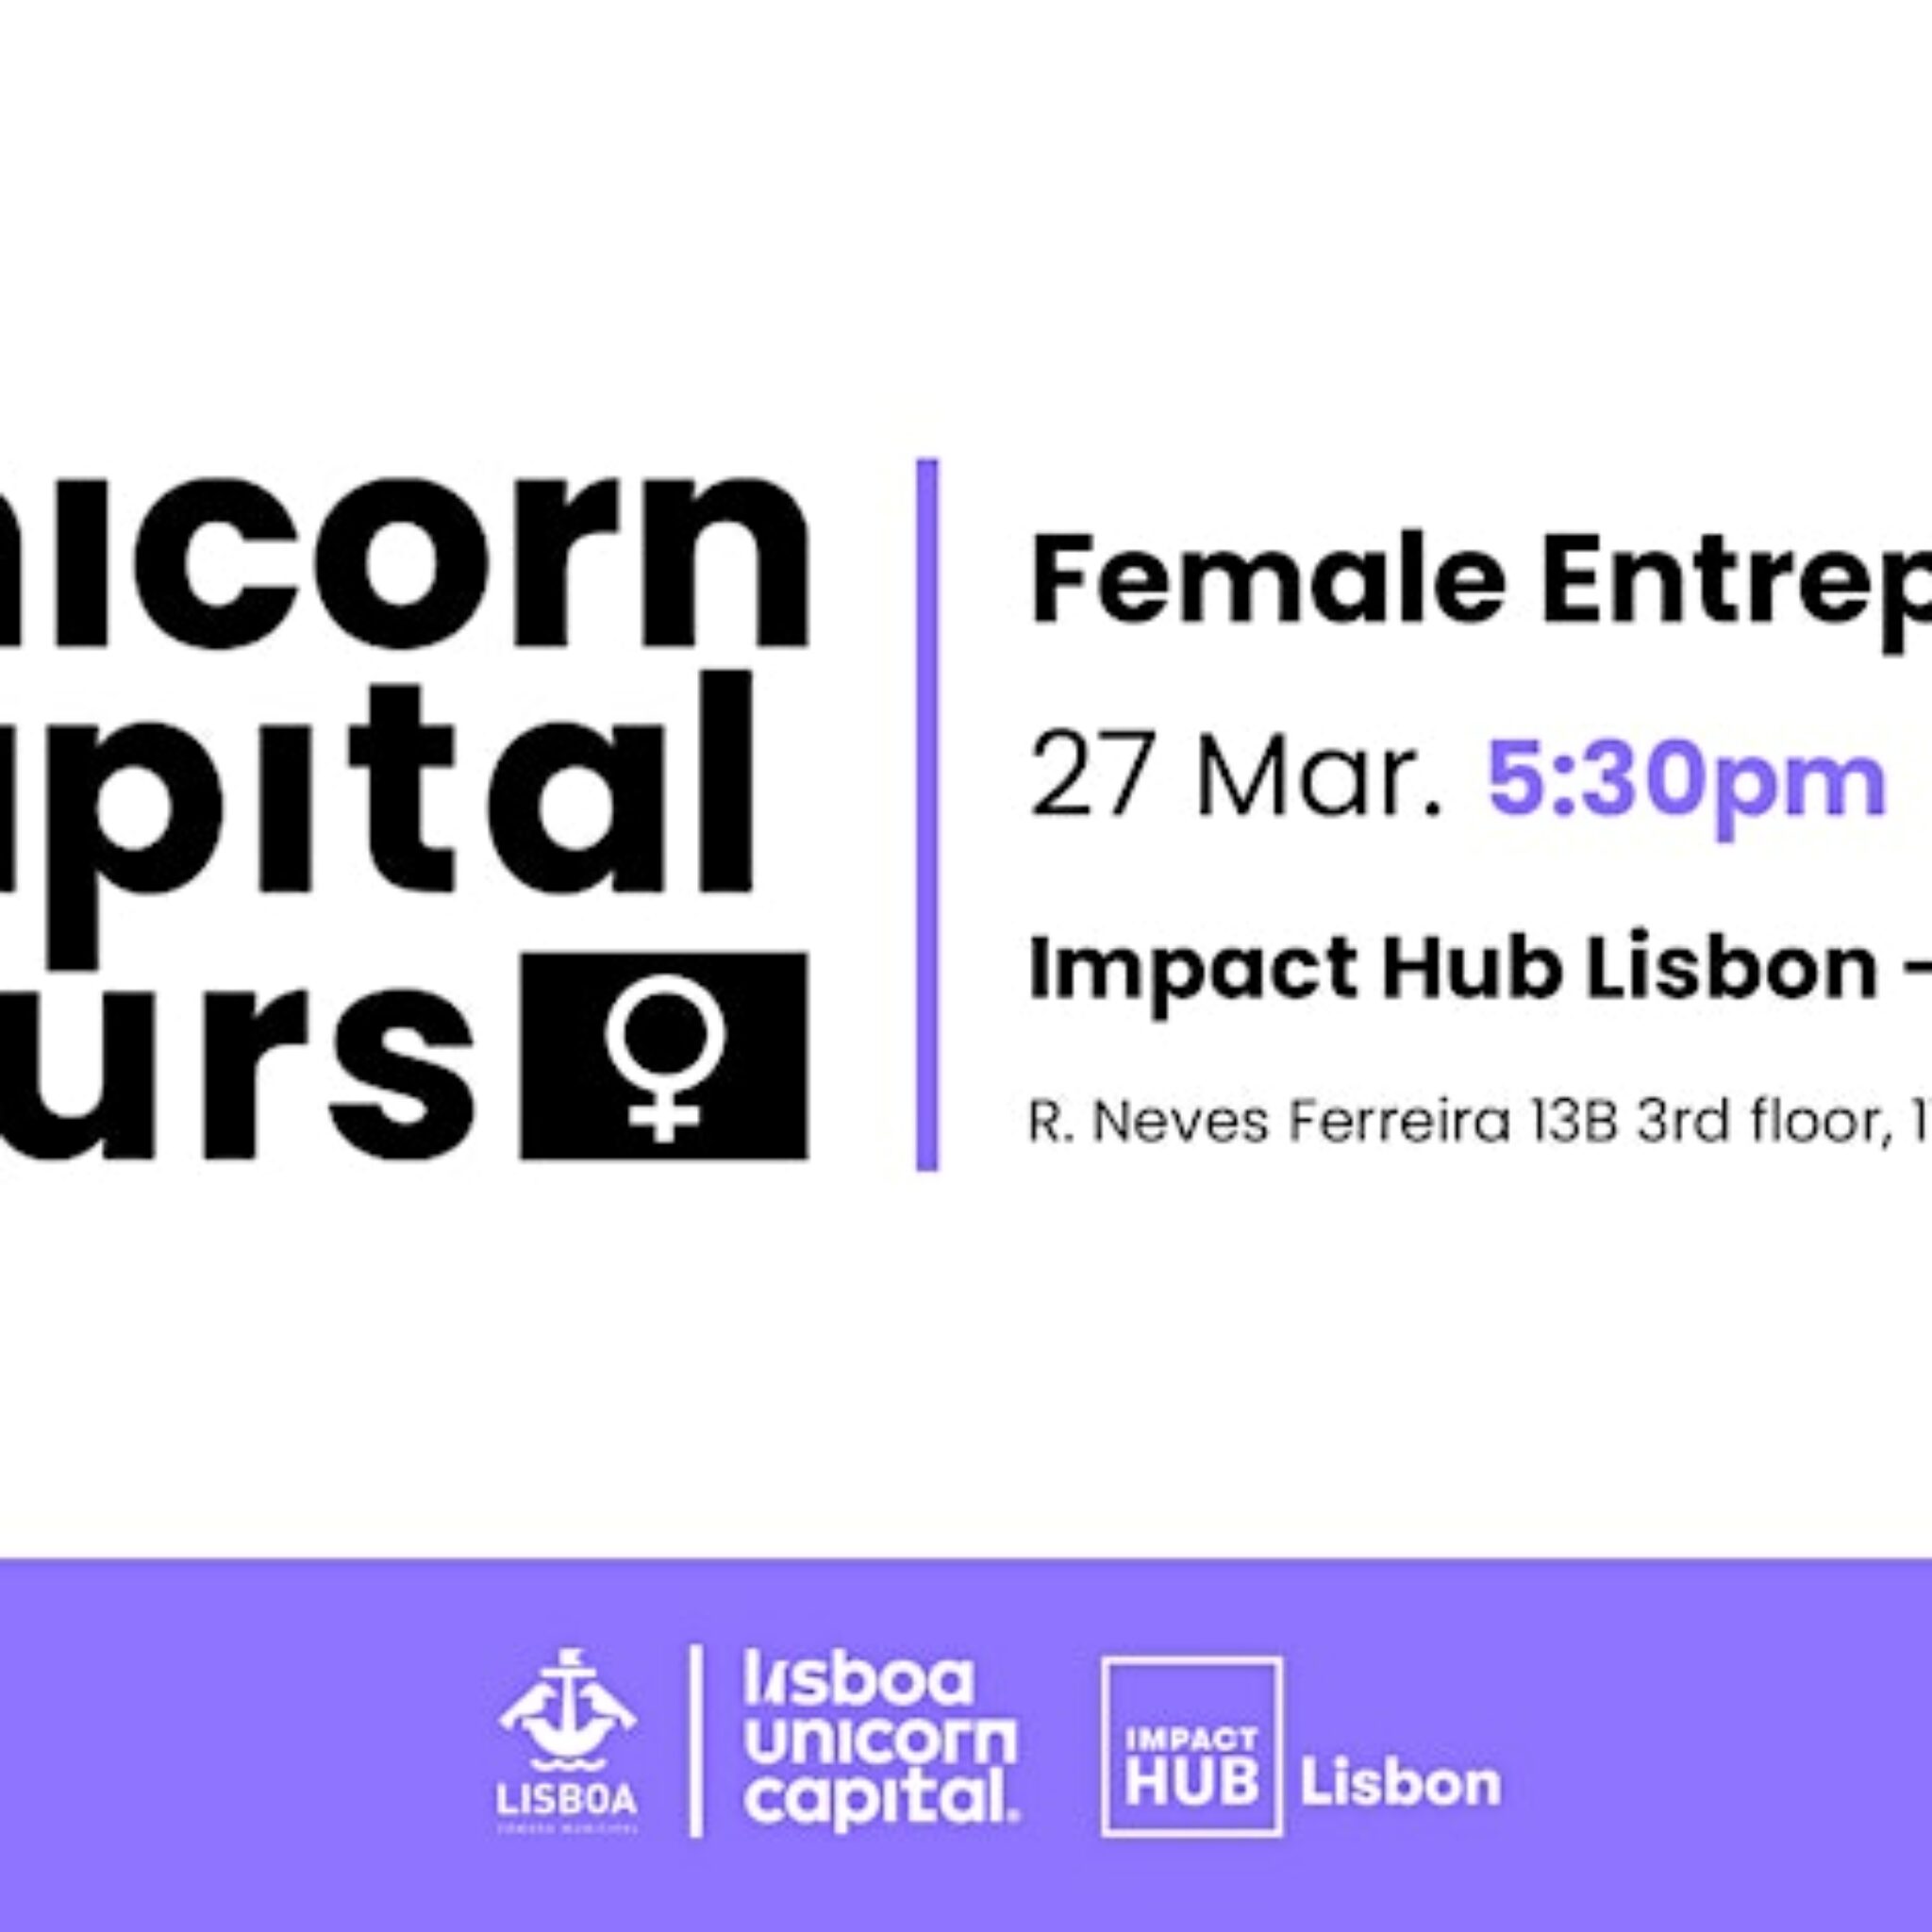 Vem aí a Semana do Empreendedorismo de Lisboa. Descobre como aproveitar